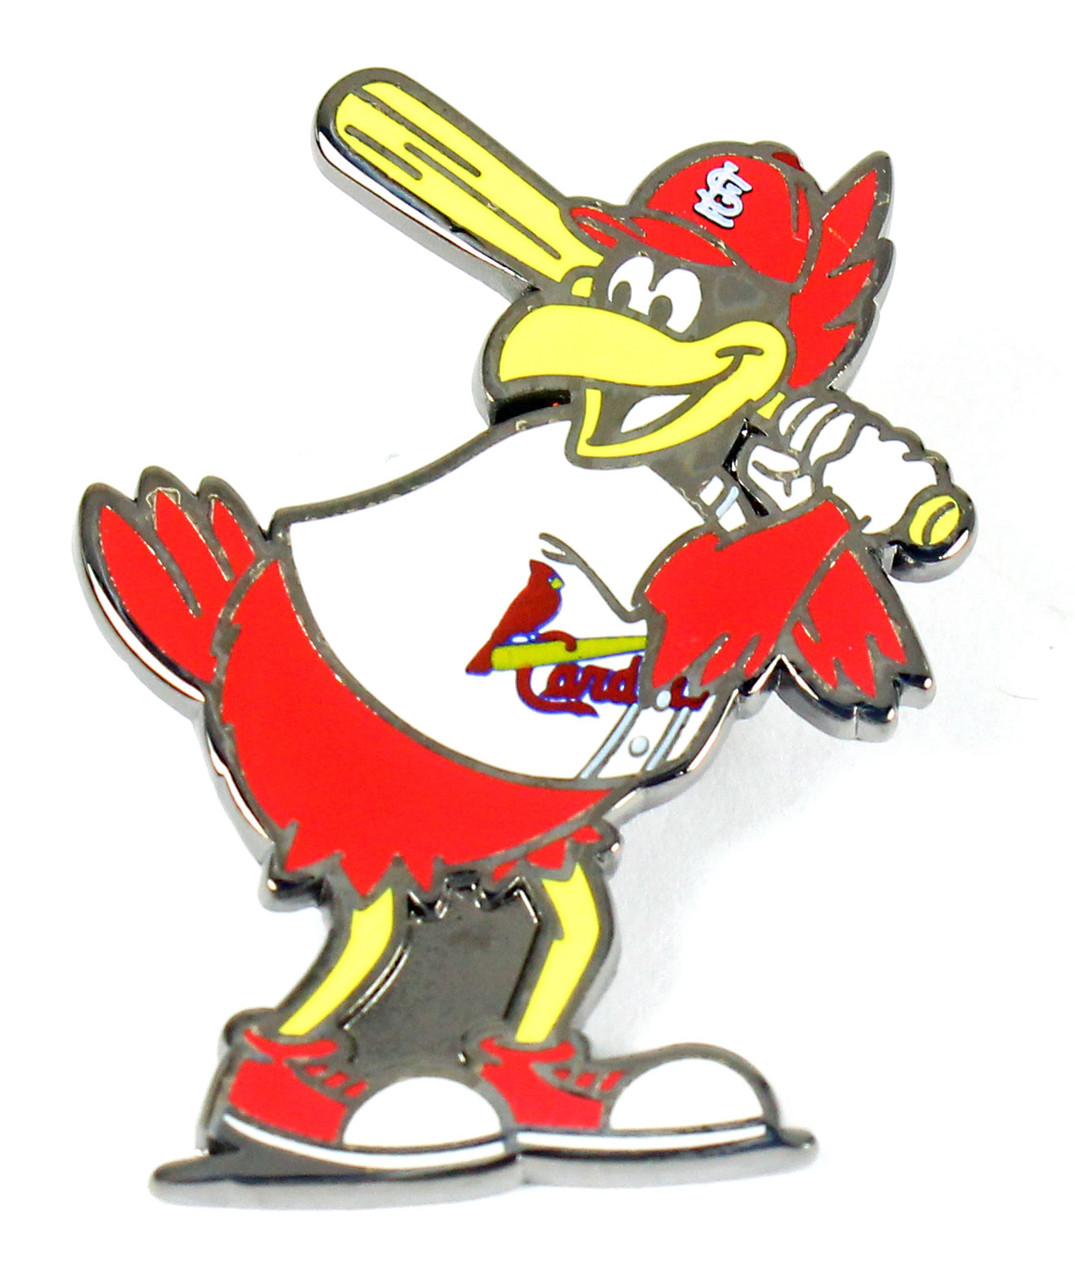 st louis cardinals mascot